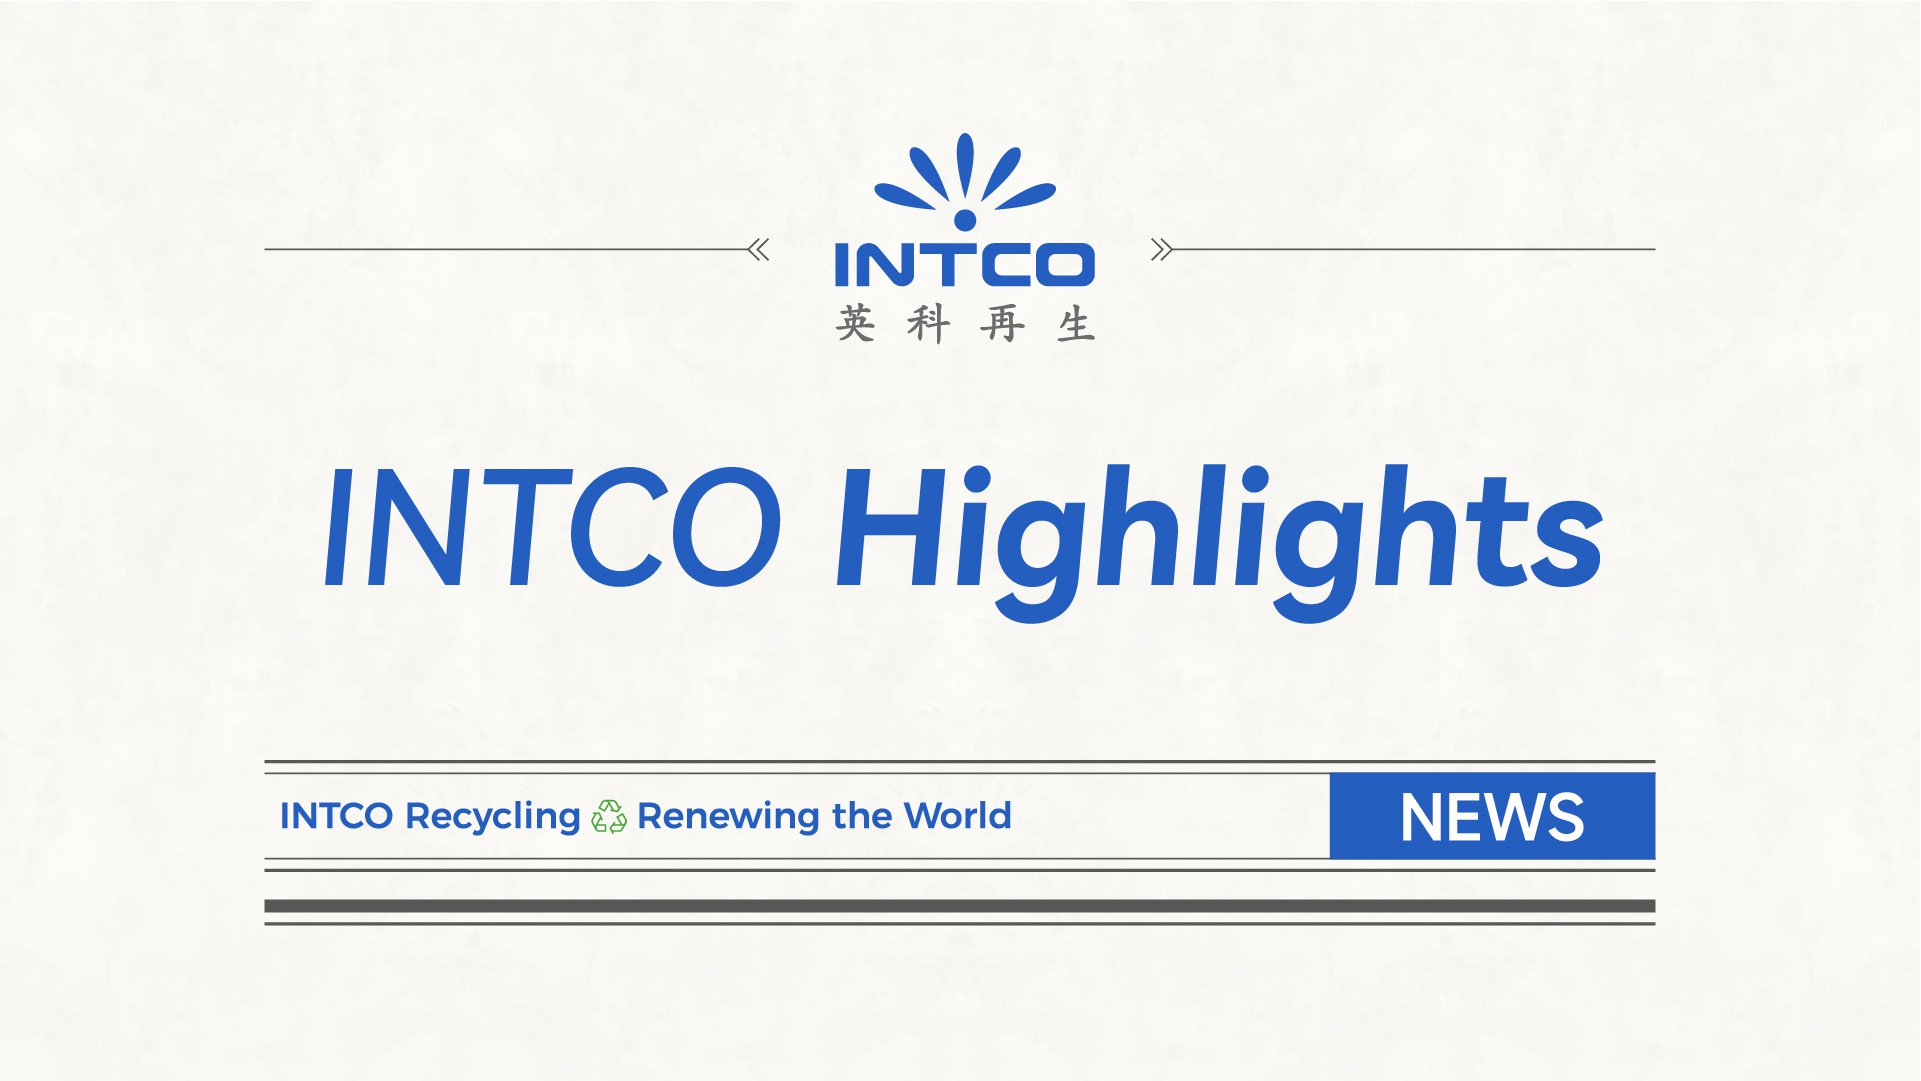 INTCO Highlights